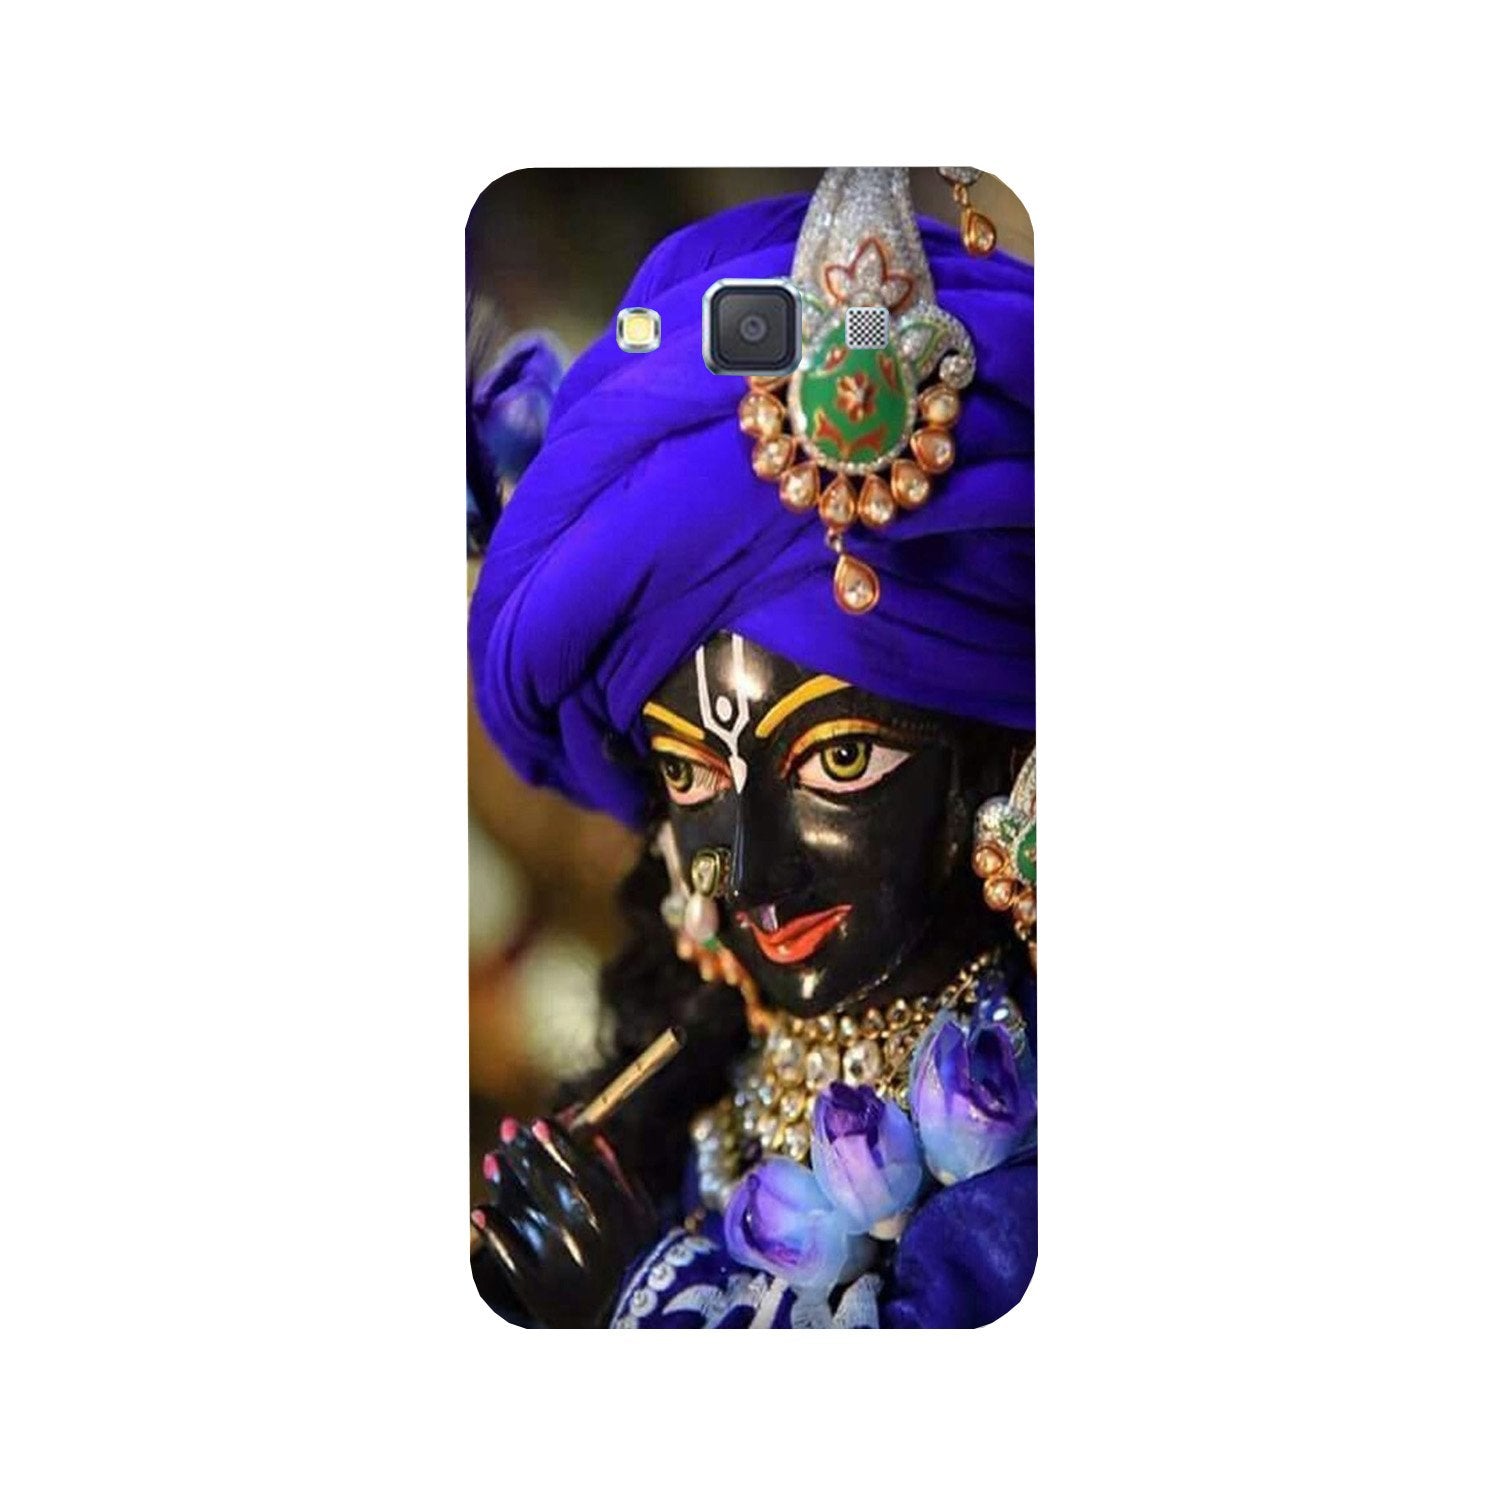 Lord Krishna4 Case for Galaxy A5 (2015)